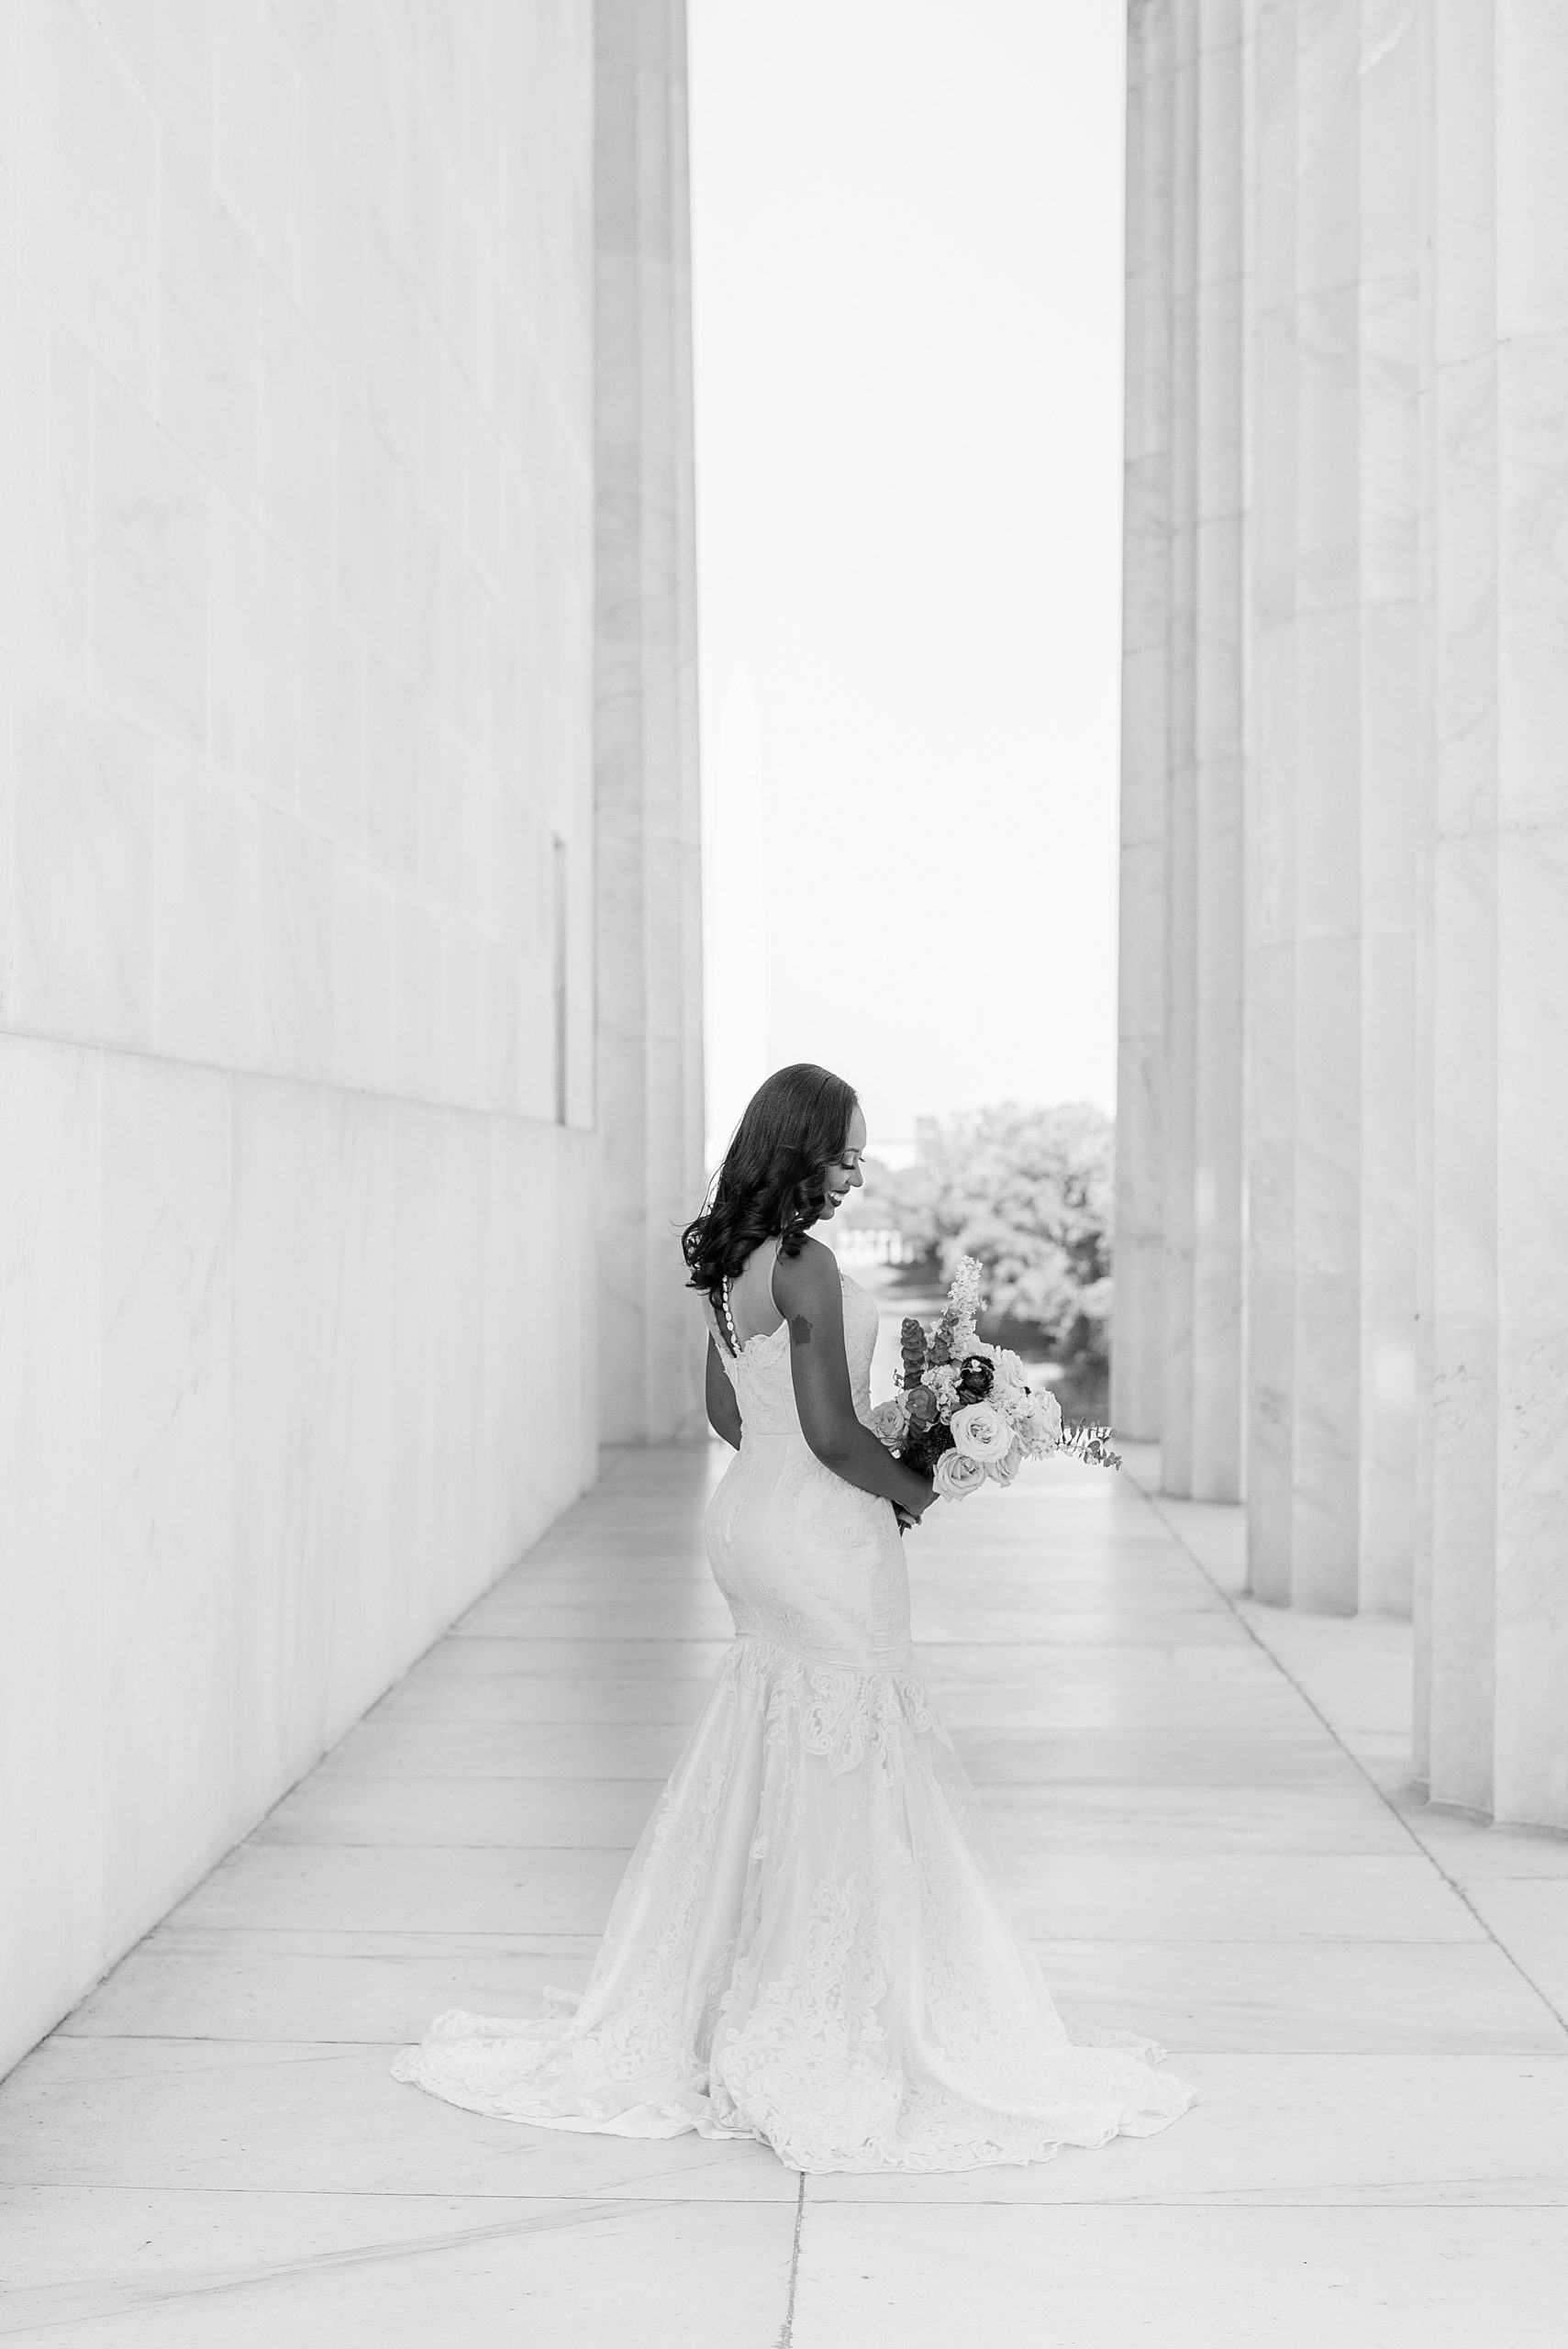 Lincoln Memorial bridal portraits for DMV bride